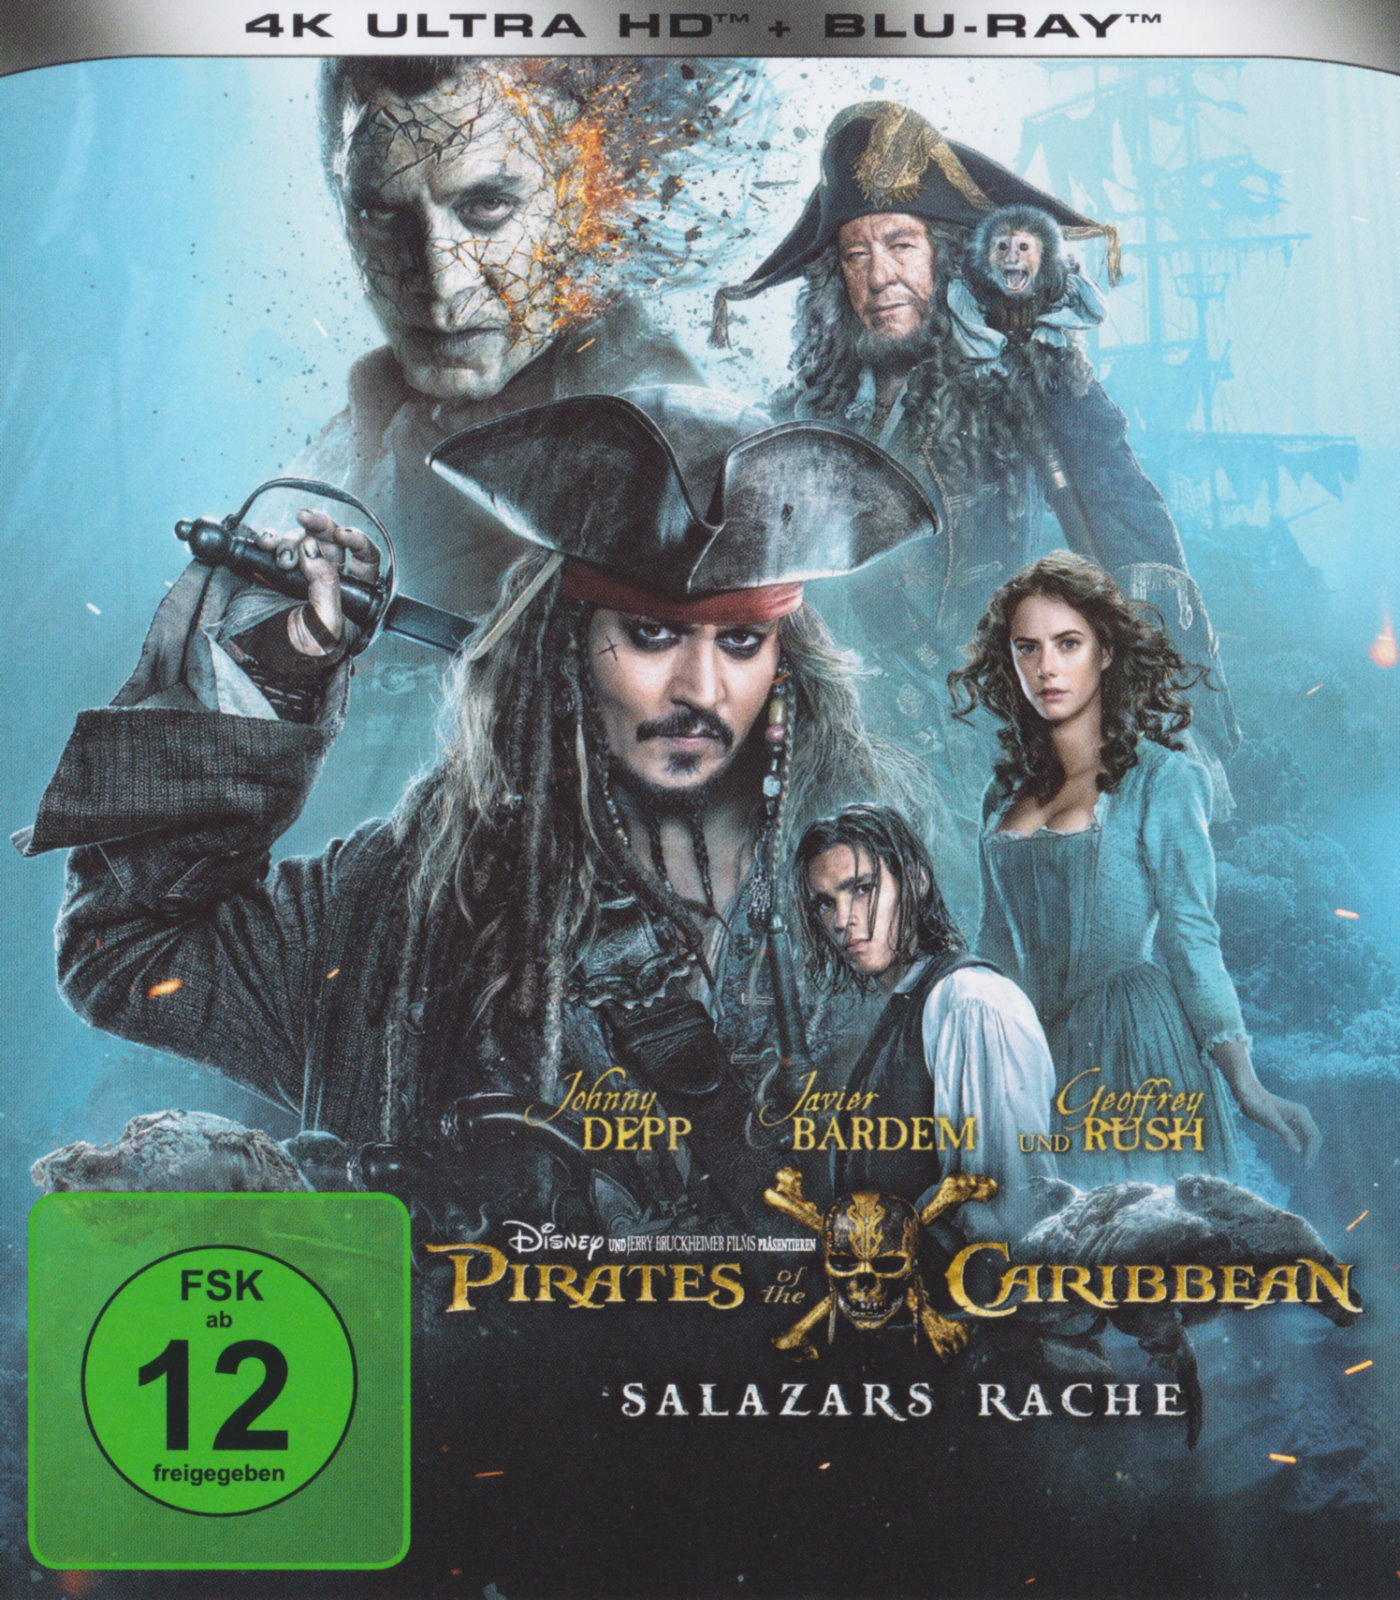 Cover - Pirates of the Caribbean - Salazars Rache.jpg